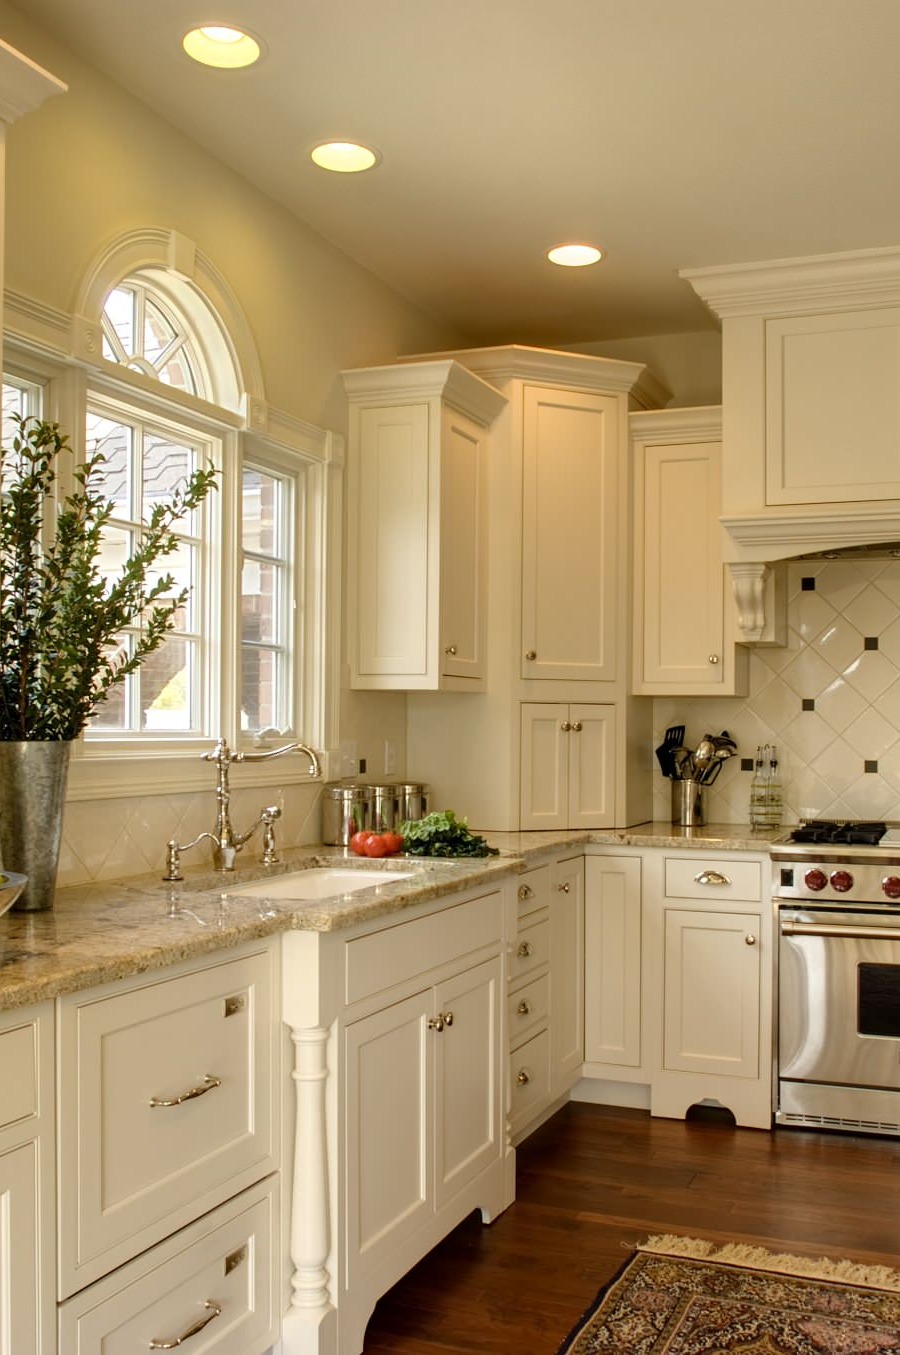 Dark Hardwood Floor Cream Cabinets Gold Color Granite Countertops White Backsplash Tiles